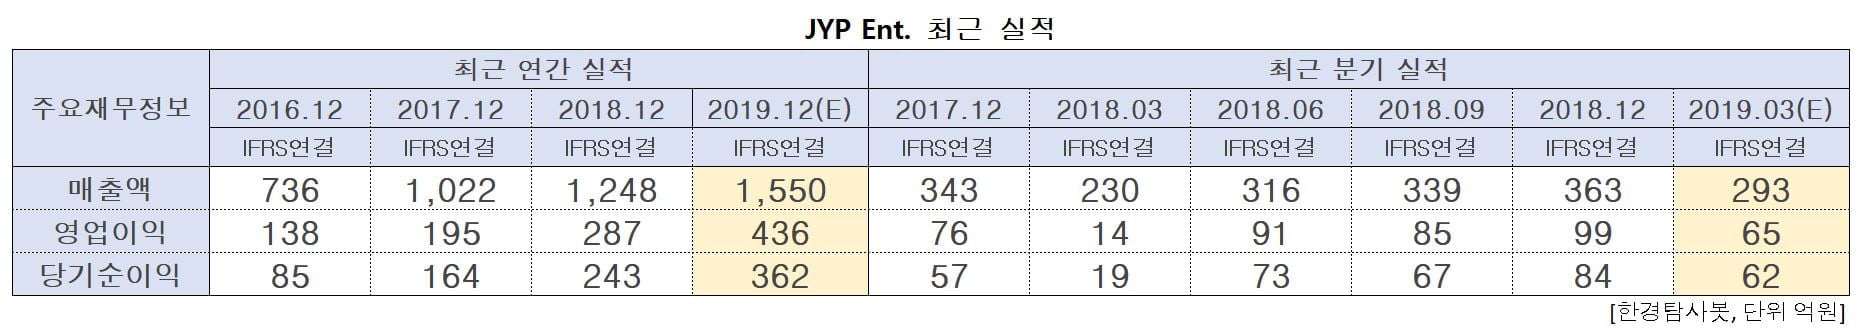 JYP Ent. 최근 실적